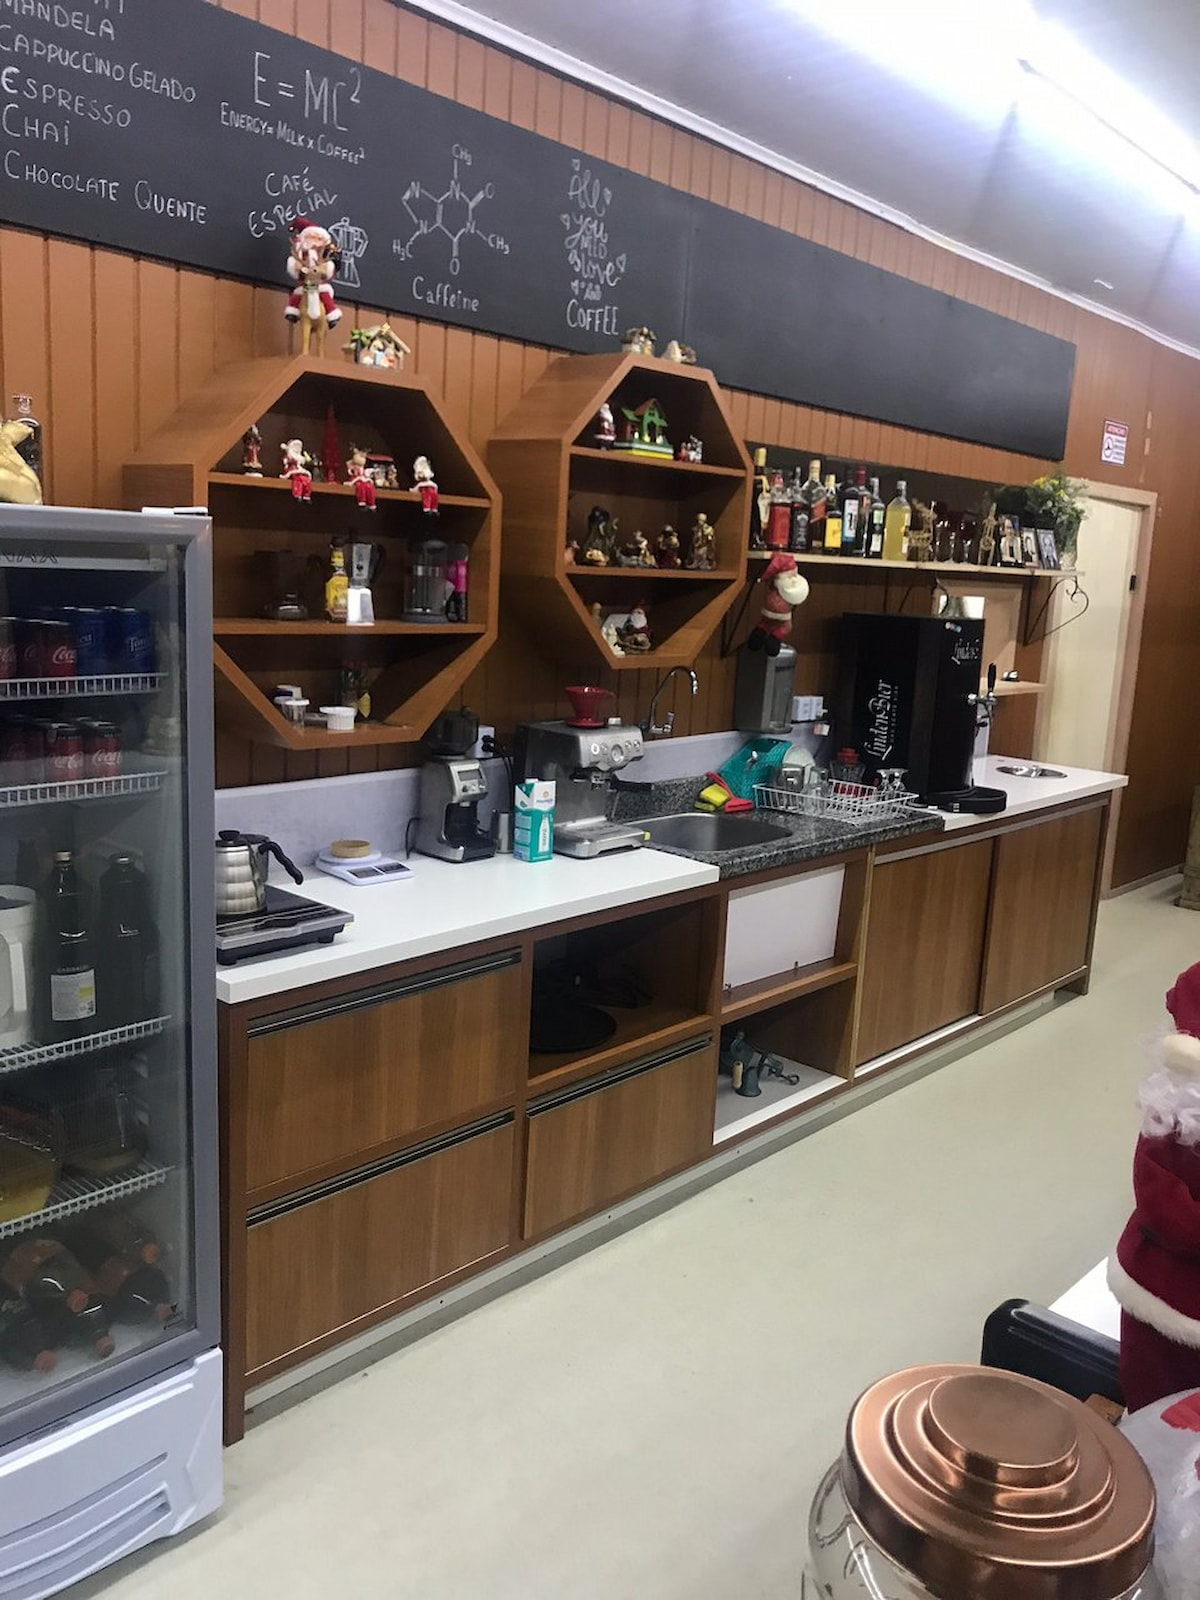 Illa Armazém Gastrobar Café